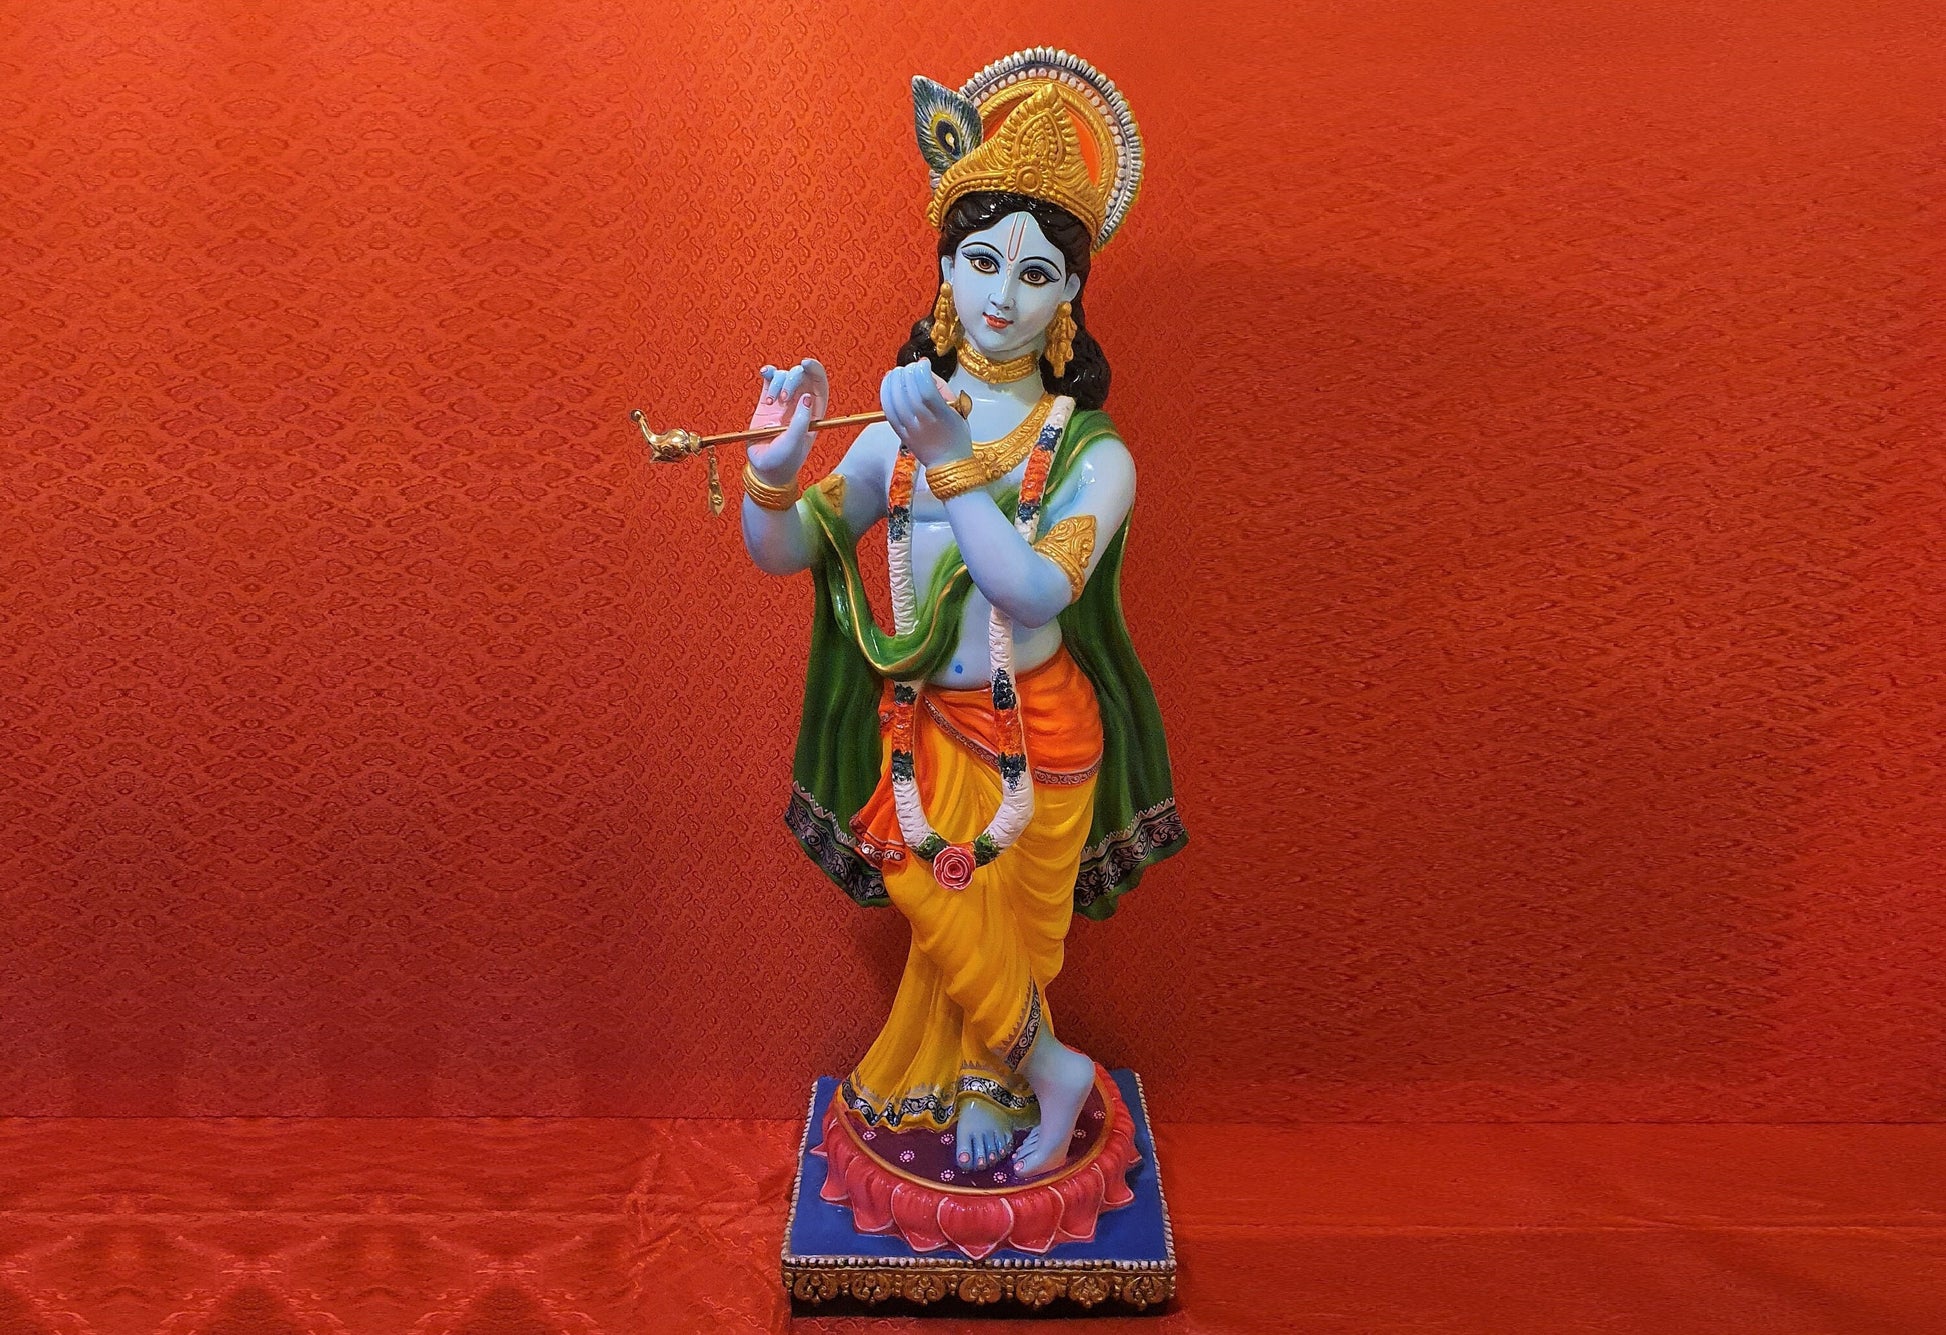 Large Lord Krishna statue